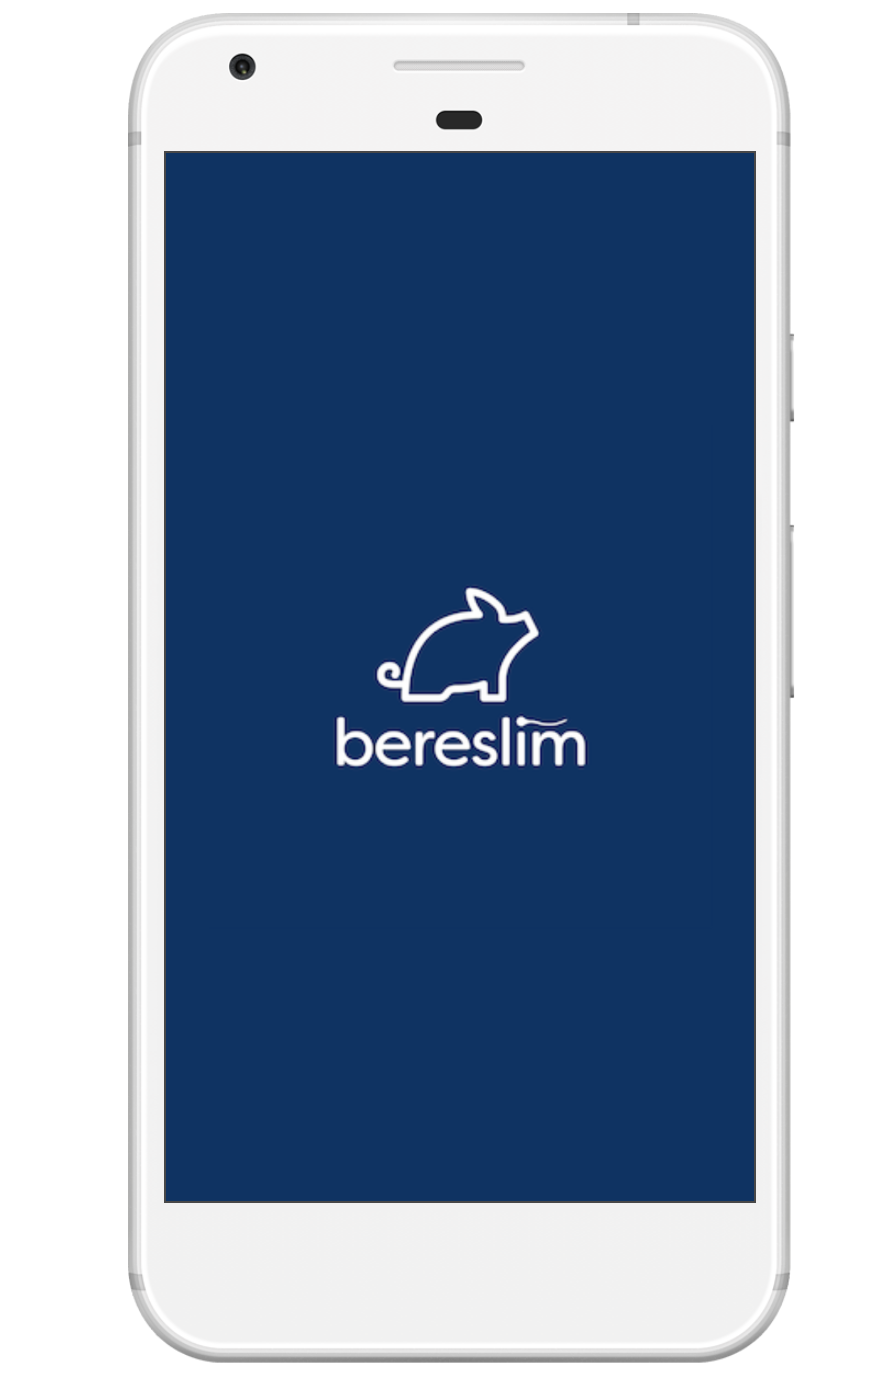 Bereslim iOS Android app